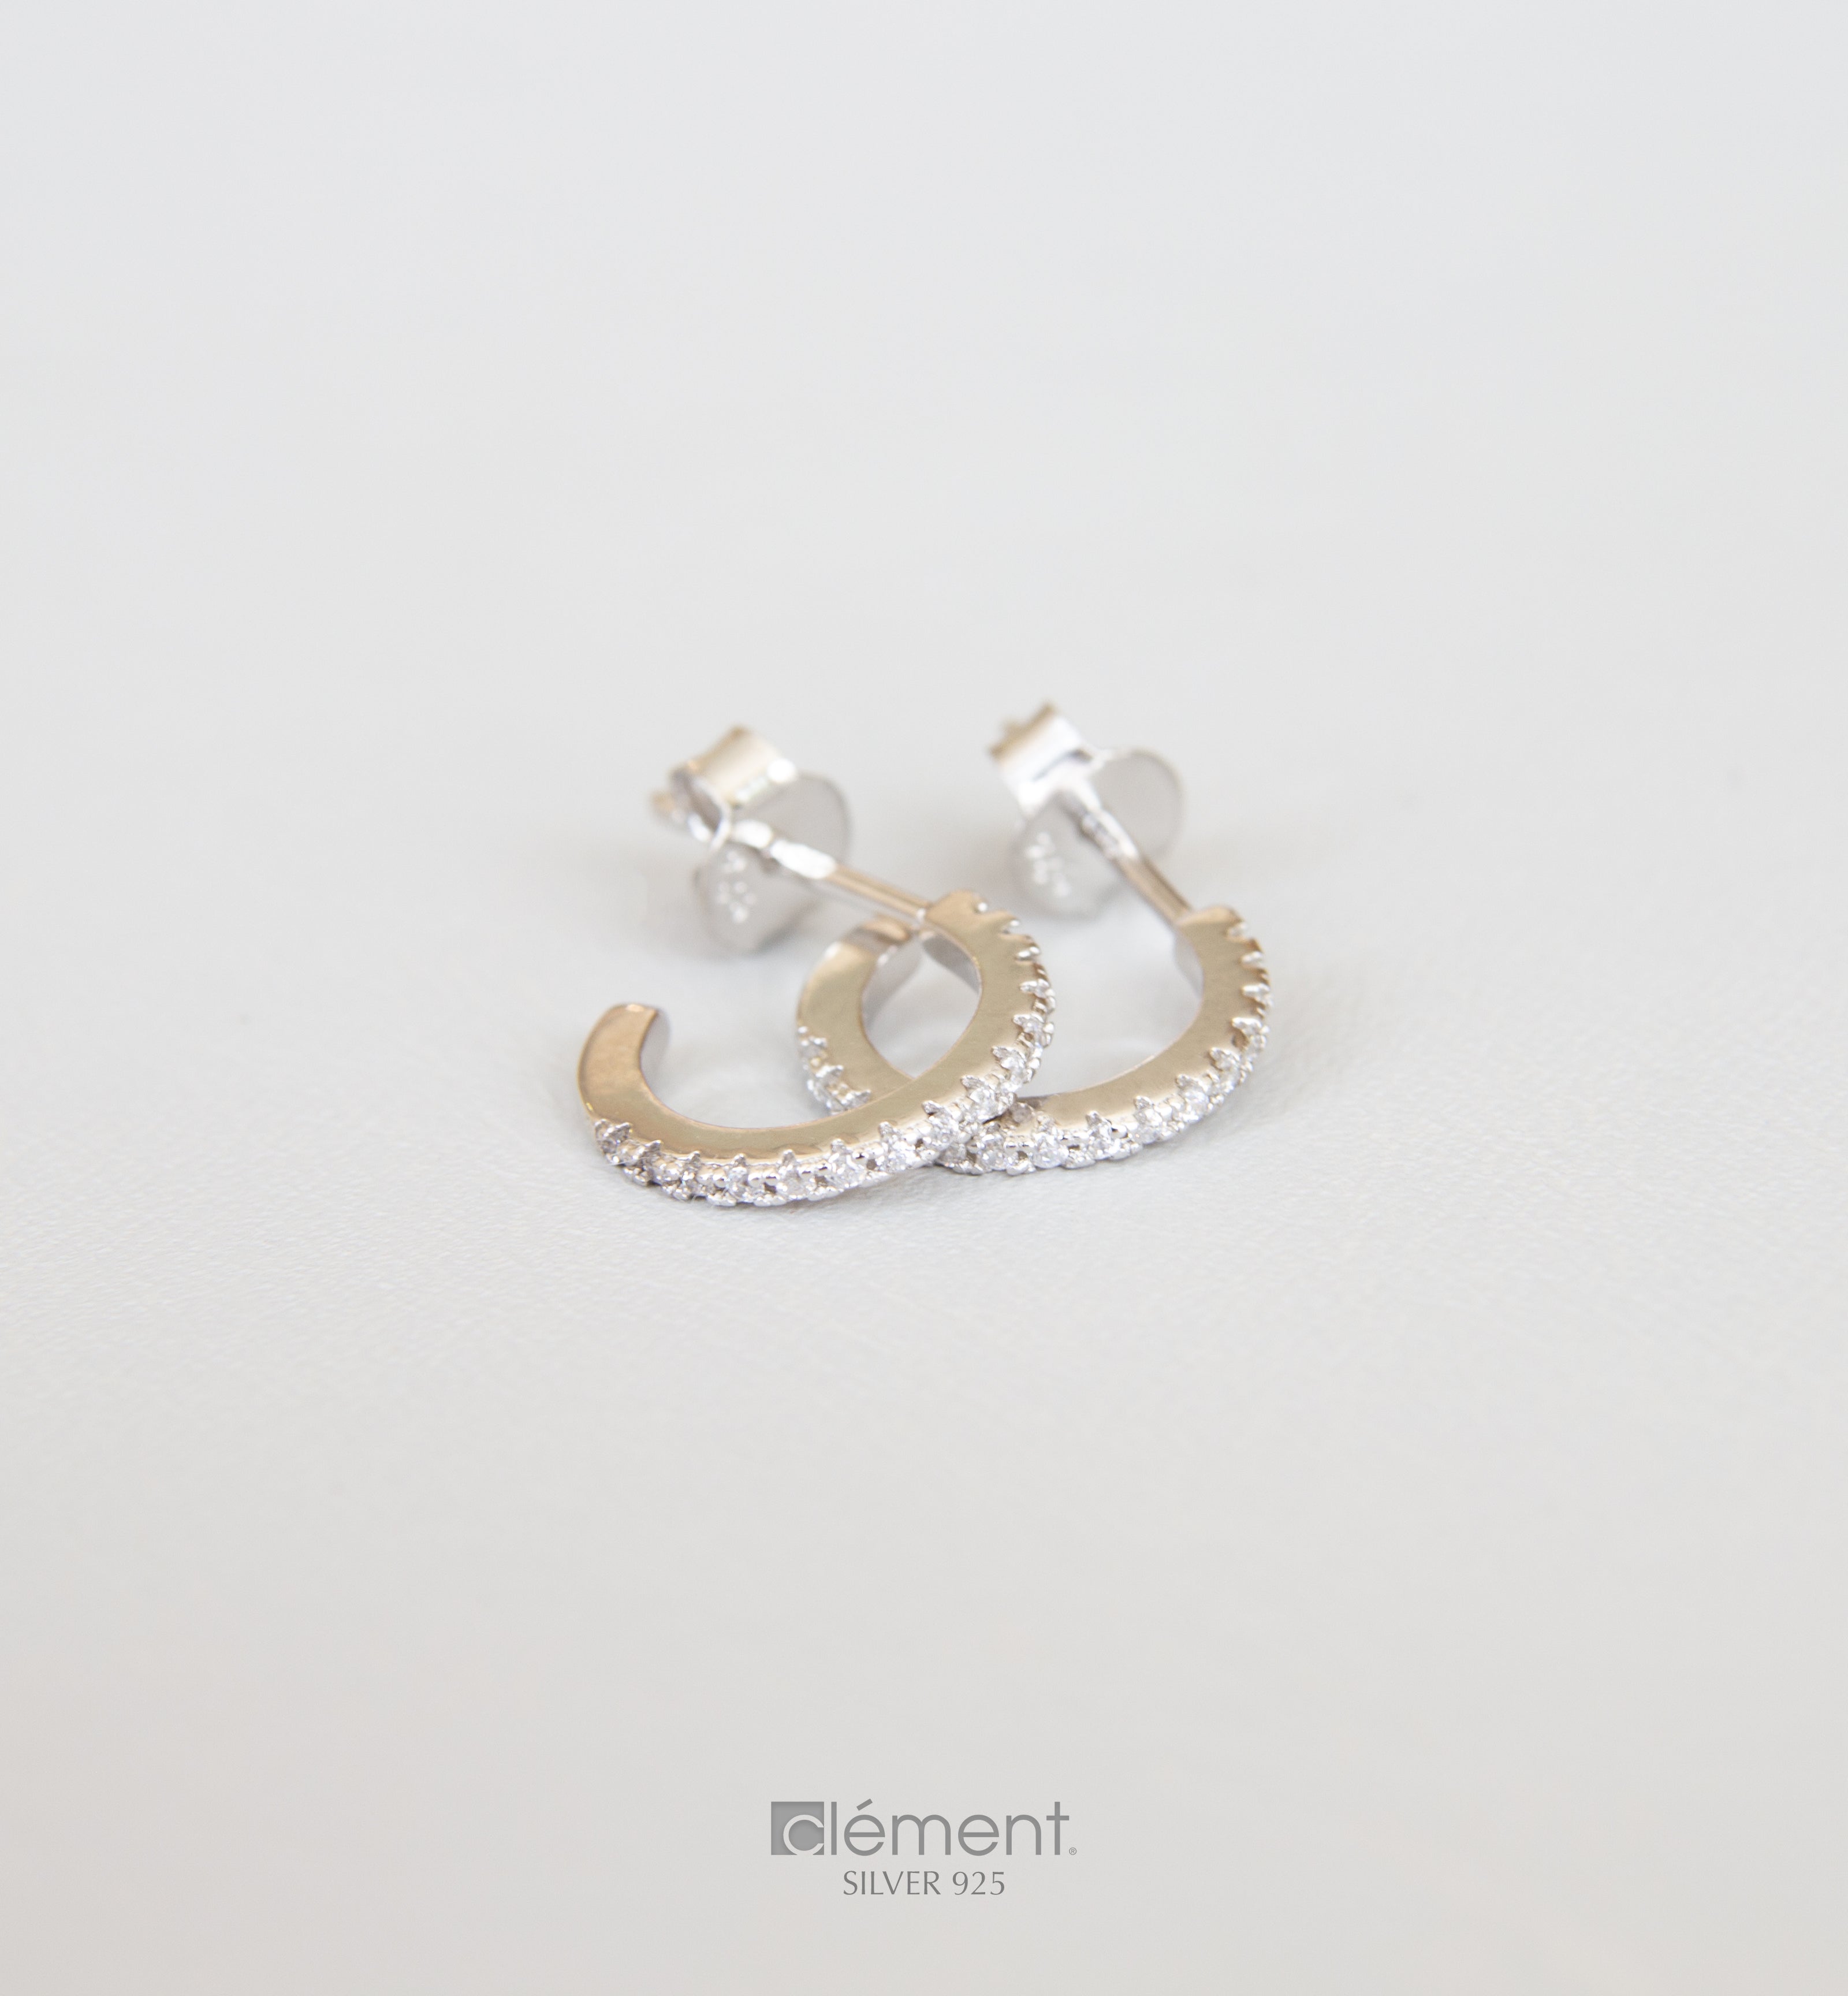 Silver 925 Hoop Earrings with Cubic Zircon Stones